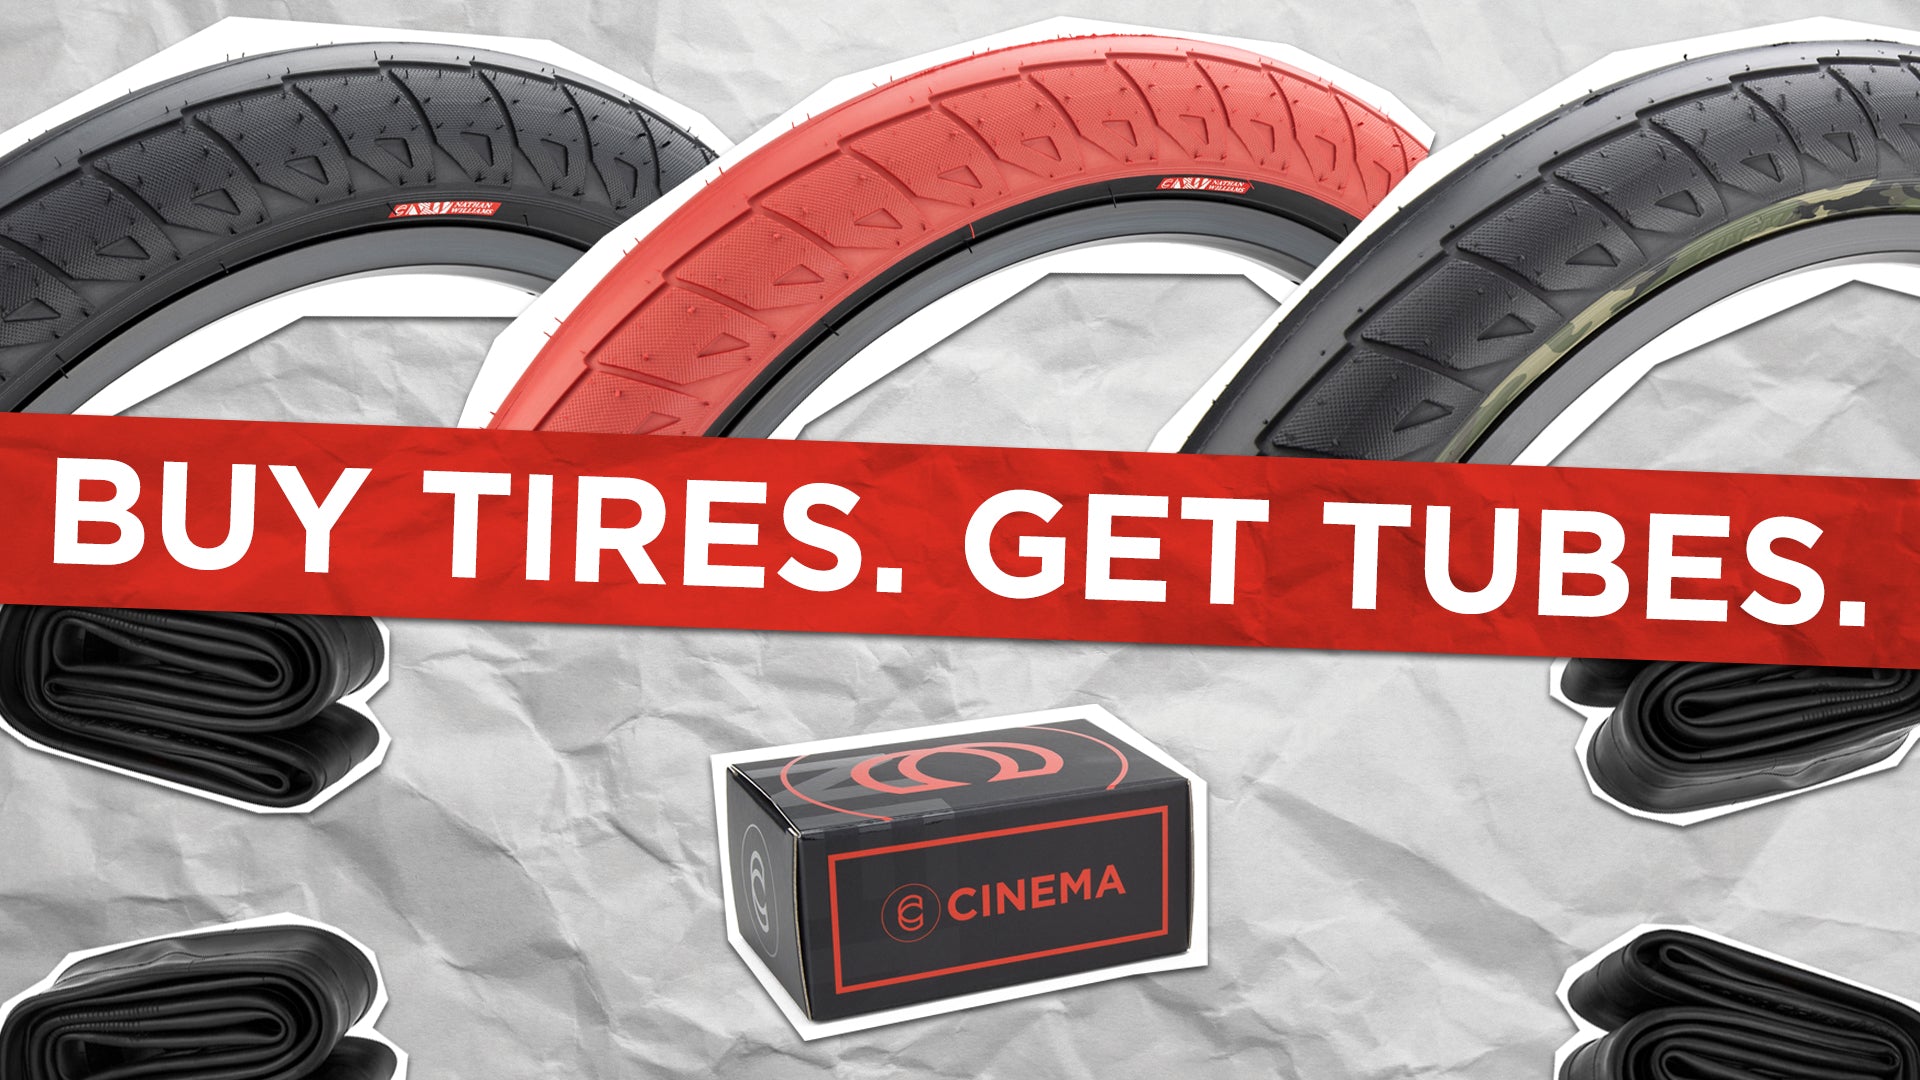 Cinema BMX Free Tubes with Tires Promo